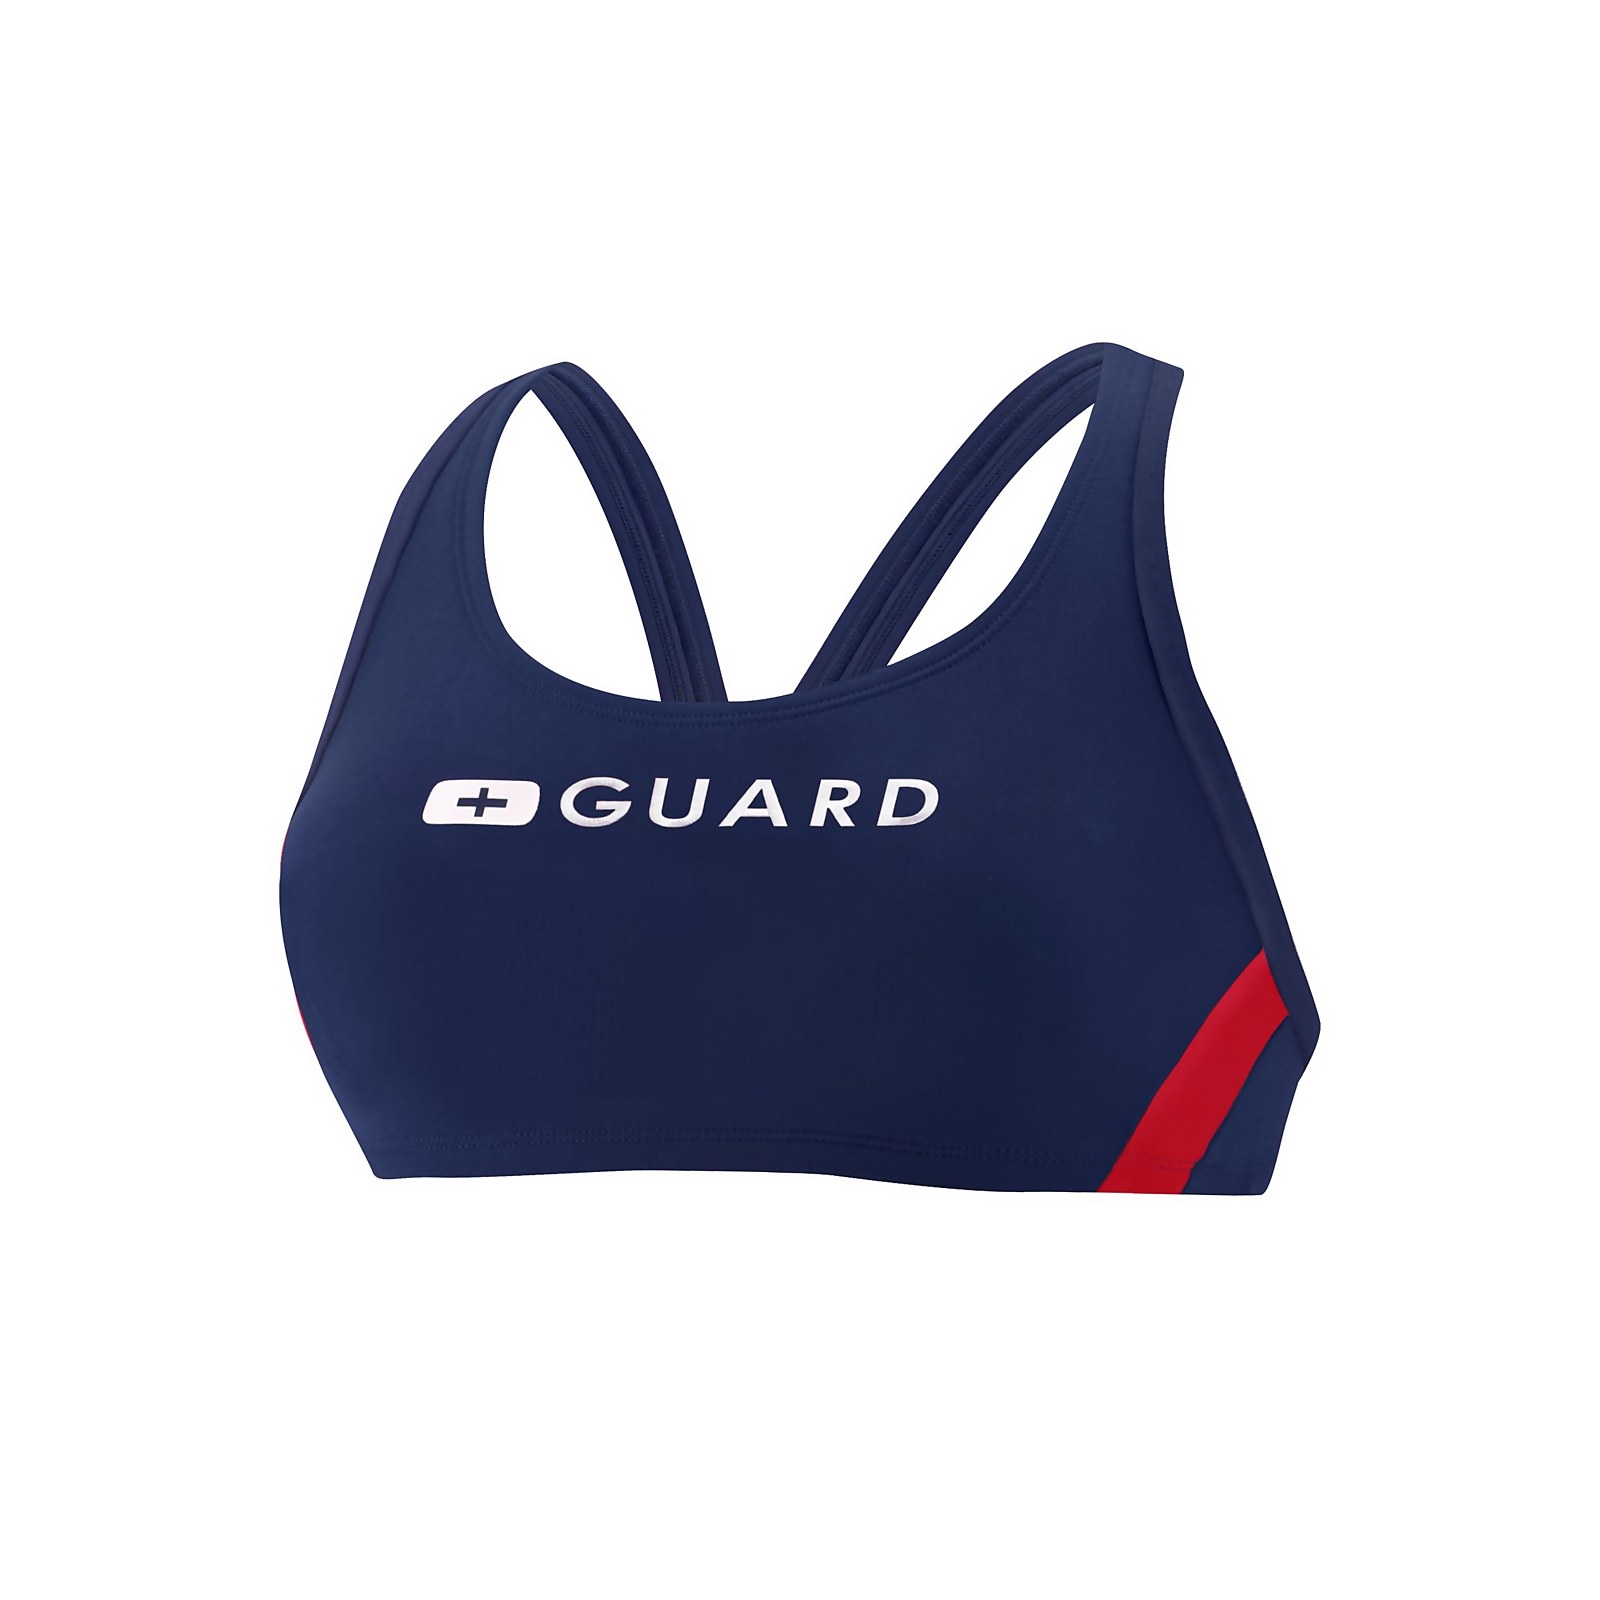 Speedo  Guard Sports Bra - L    : Navy